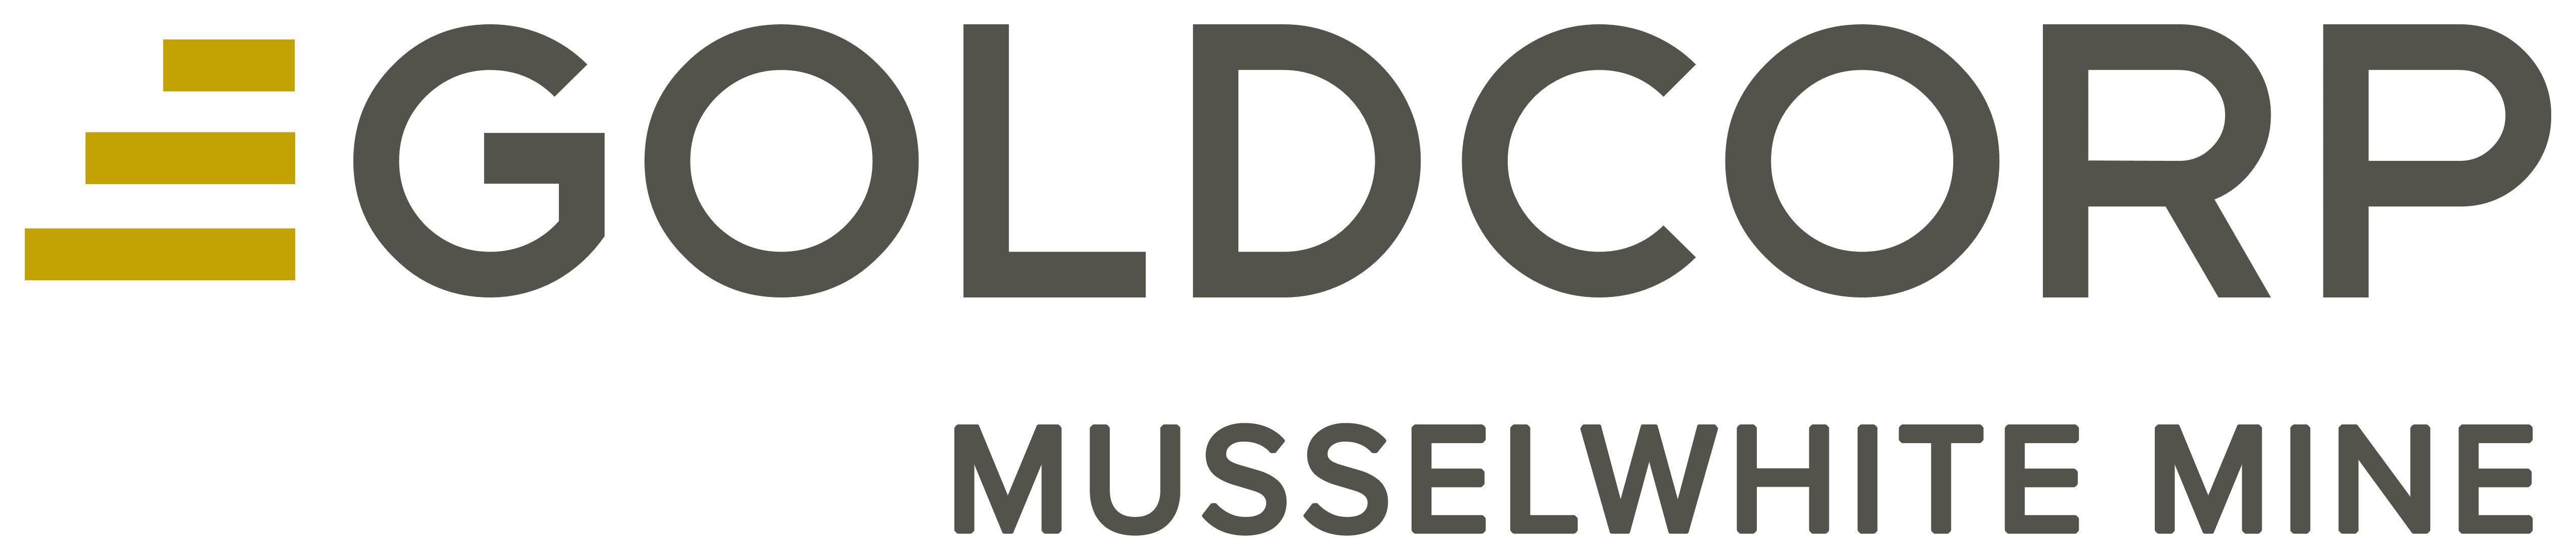 Goldcorp Logo - Goldcorp Musselwhite Mine